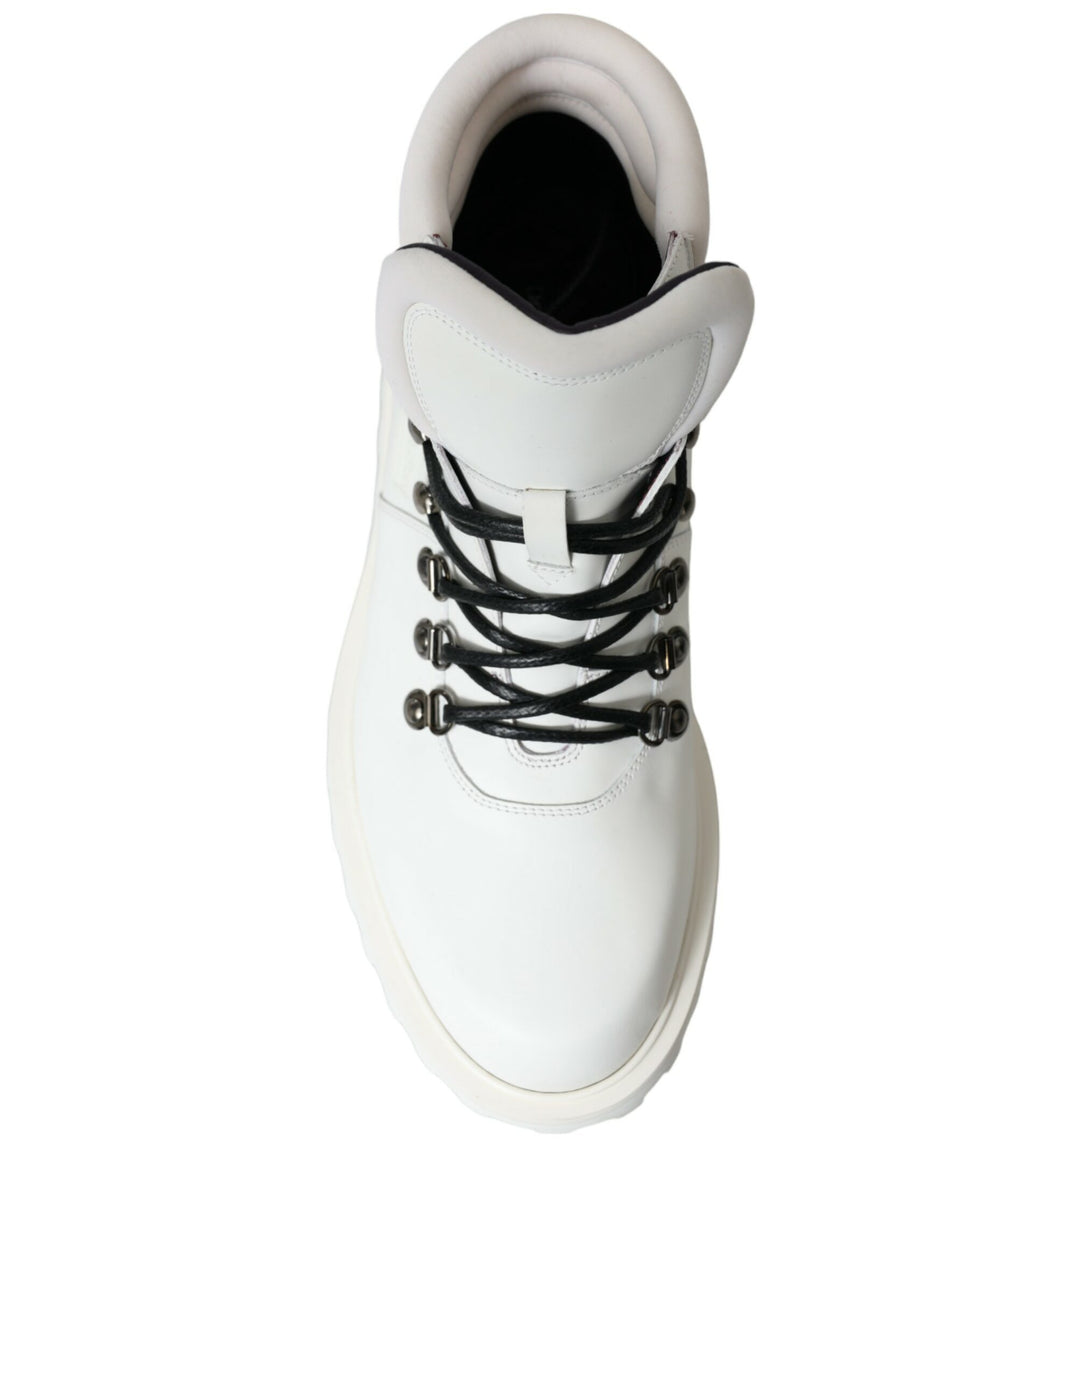 Dolce & Gabbana White Vulcano Trekking Ankle Boots Shoes